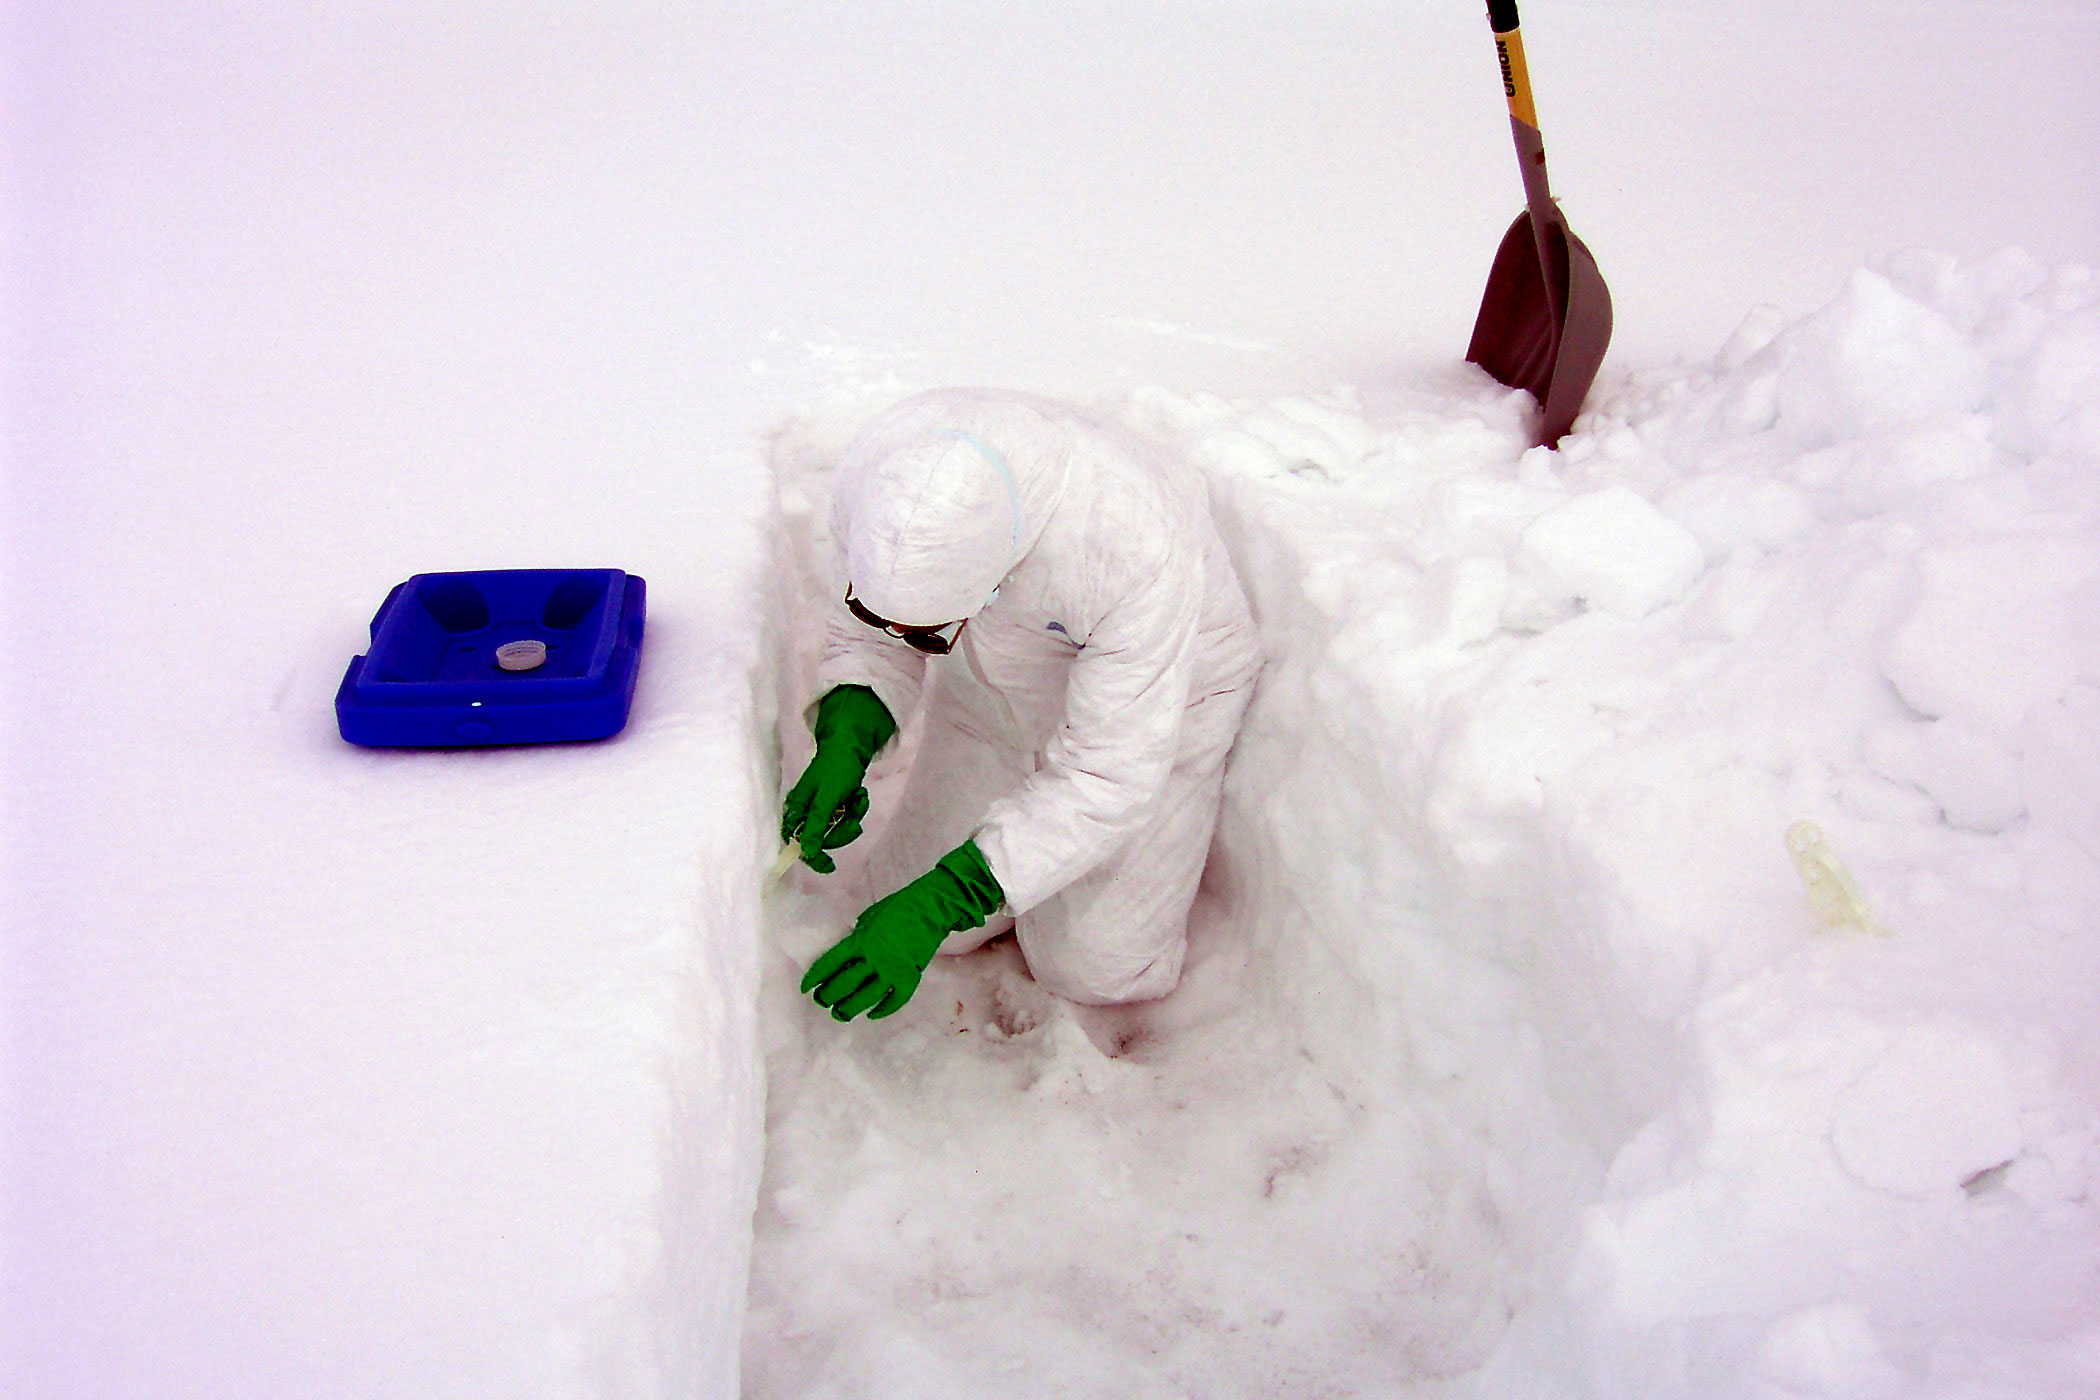 Researcher sampling snow